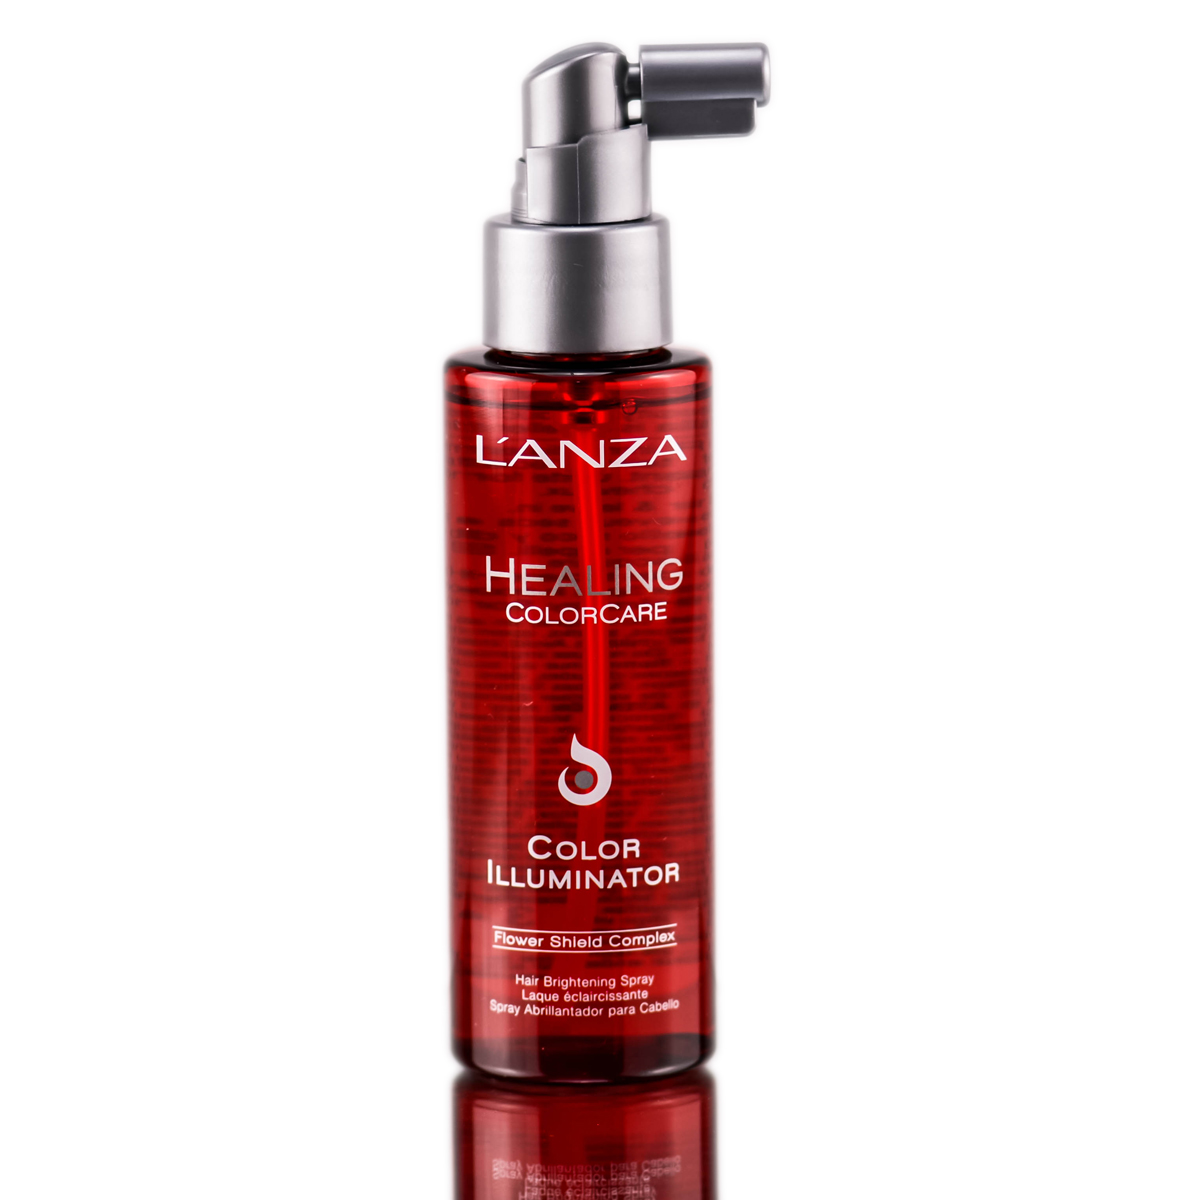 lanza-healing-colorcare-hair-brightening-spray-3-4-oz-31